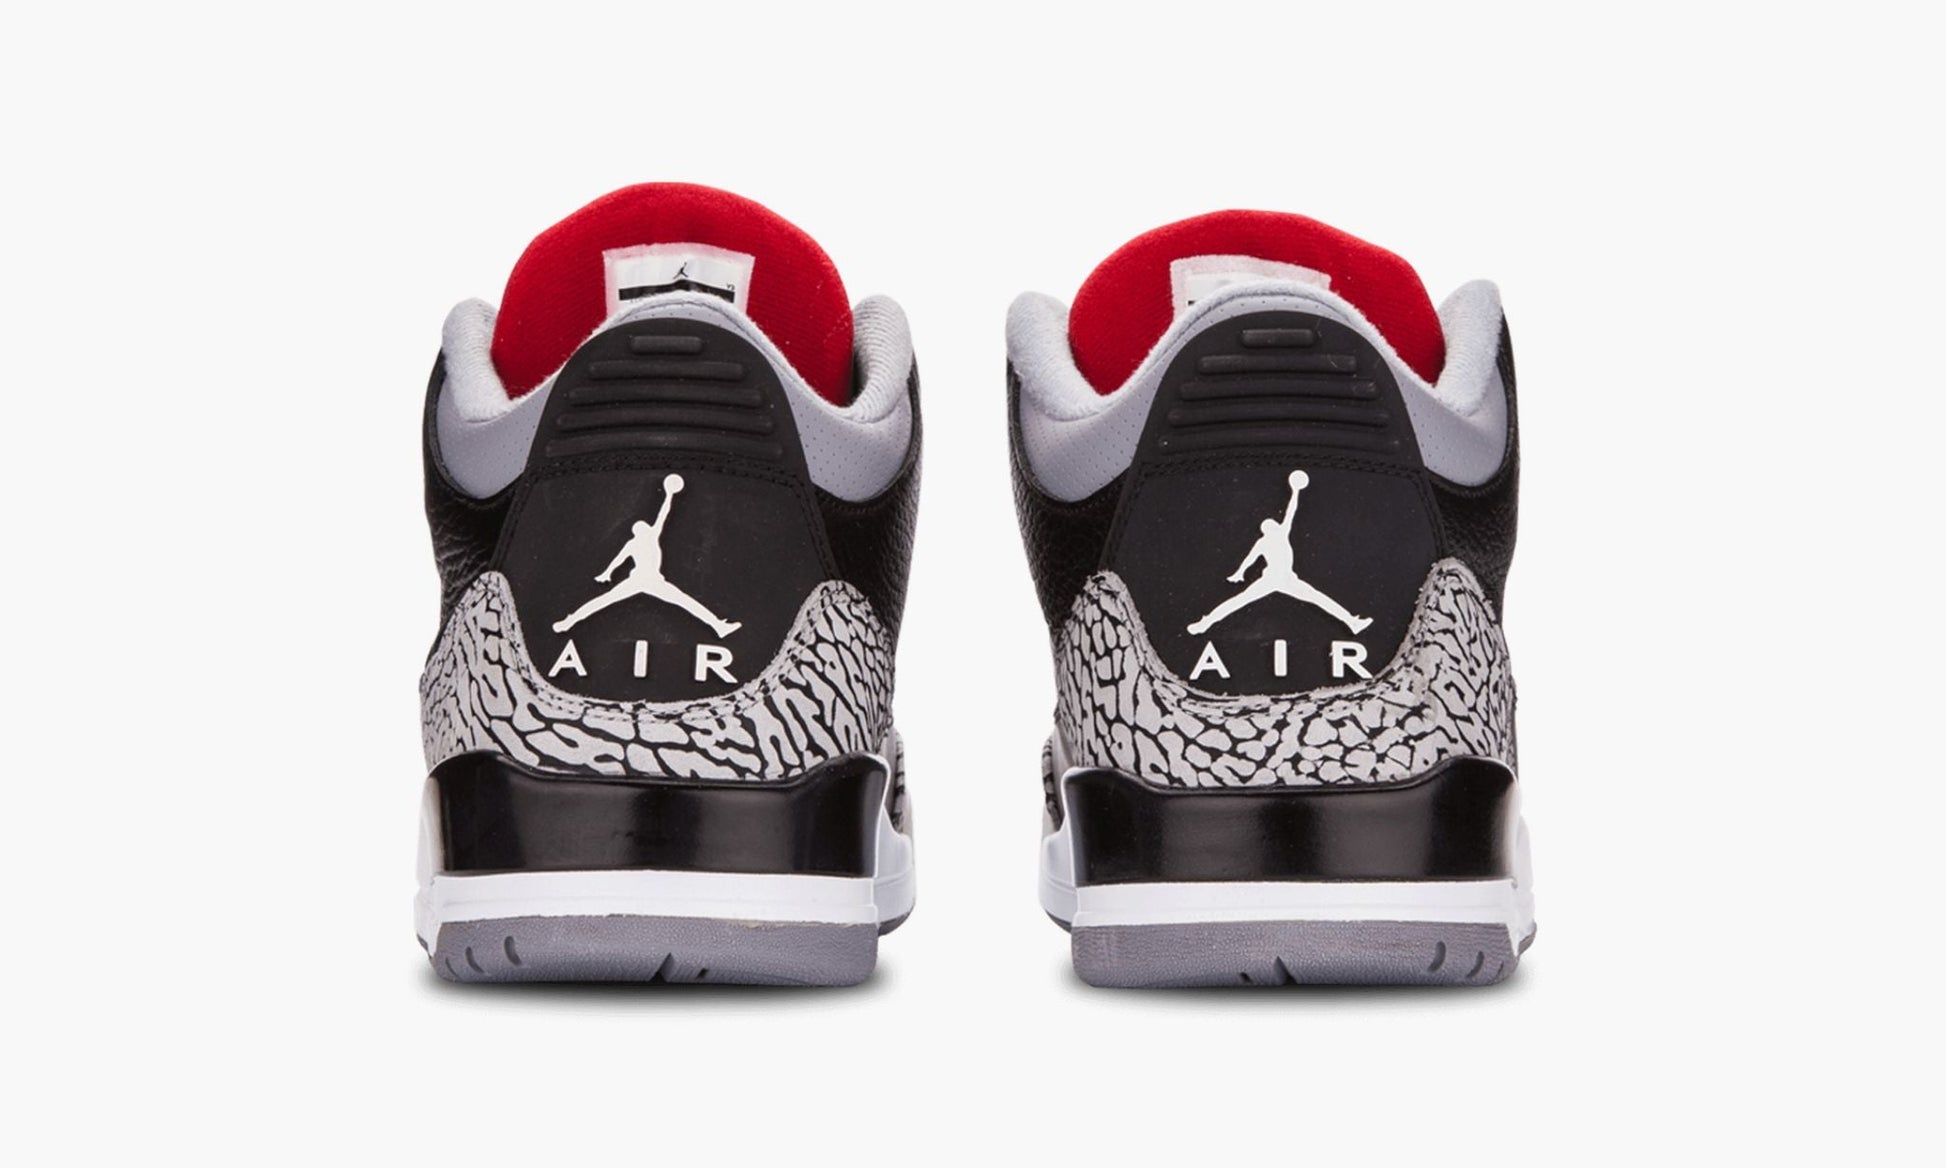 Air Jordan 3 Retro "Black Cement"